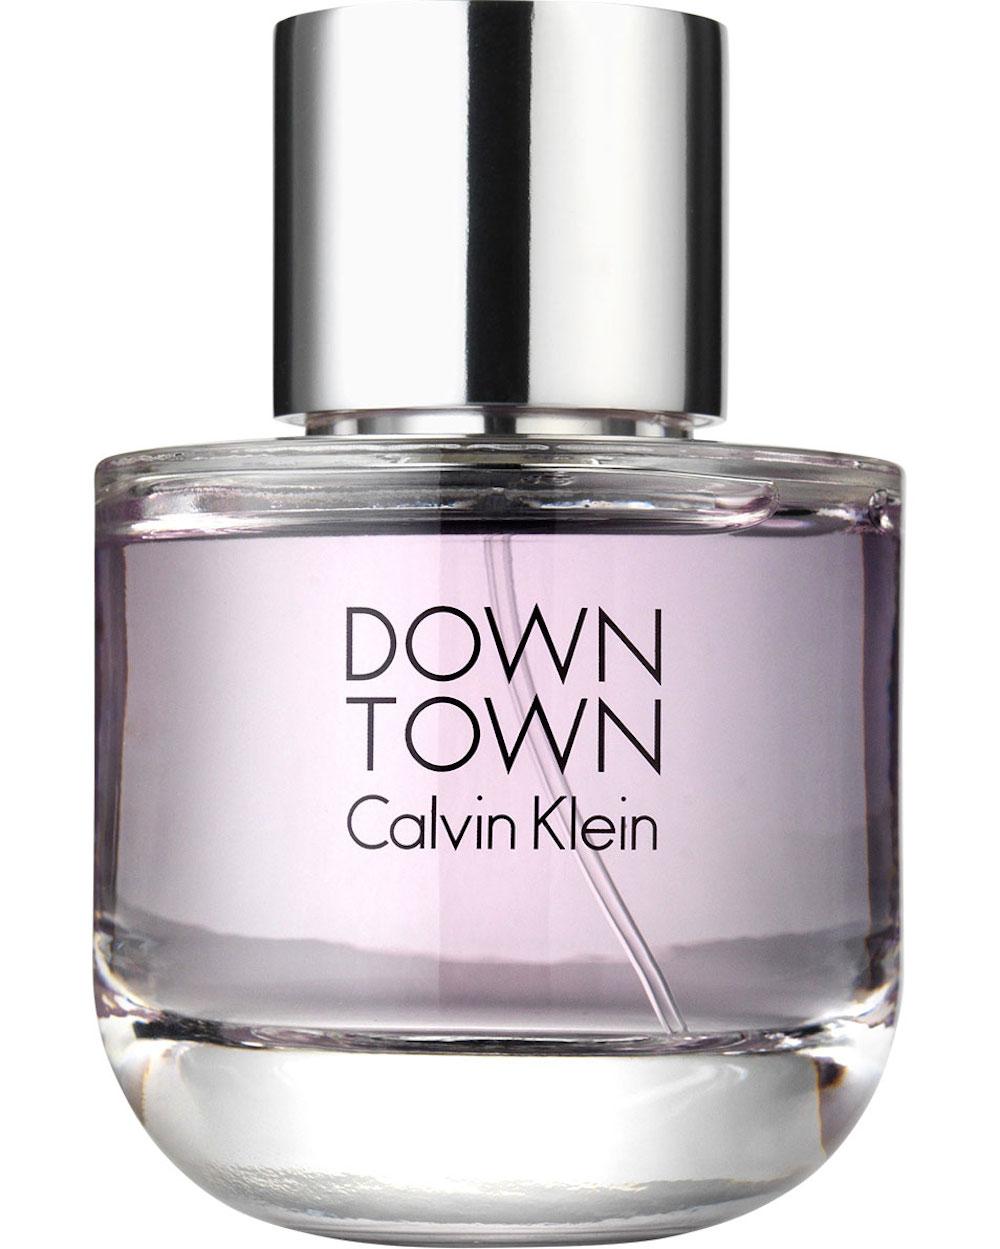 Downtown - Calvin Klein - 39,40 €( 30 ml)